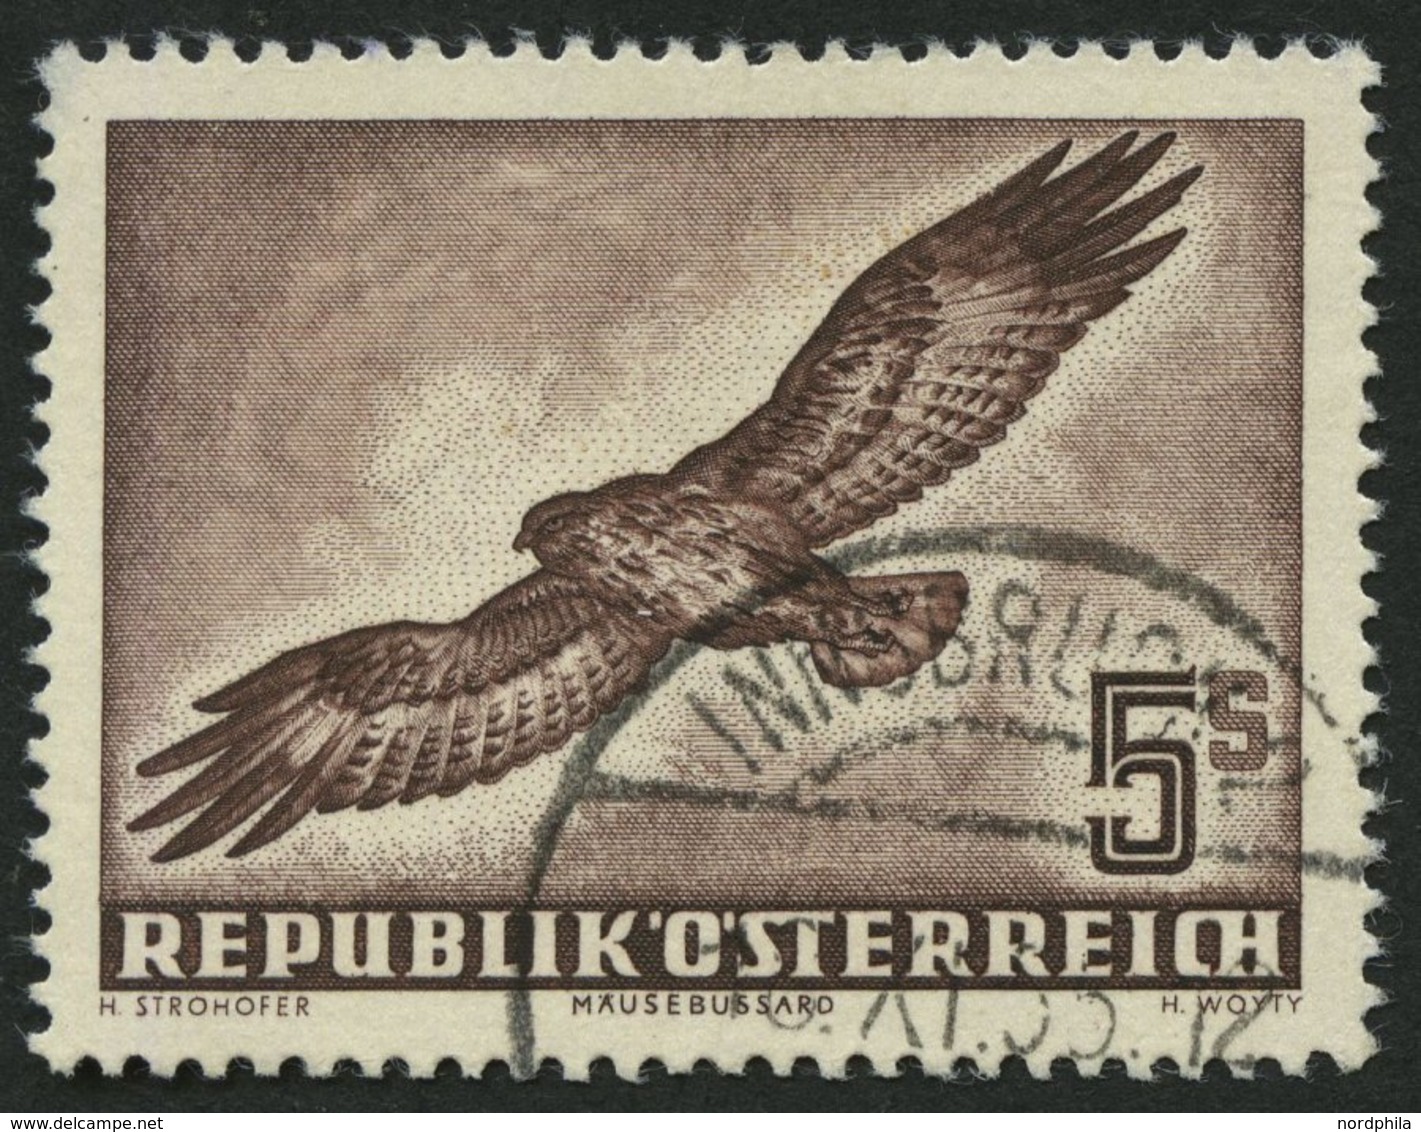 ÖSTERREICH 986 O, 1953, 5 S. Vögel, Pracht, Mi. 120.- - Usati